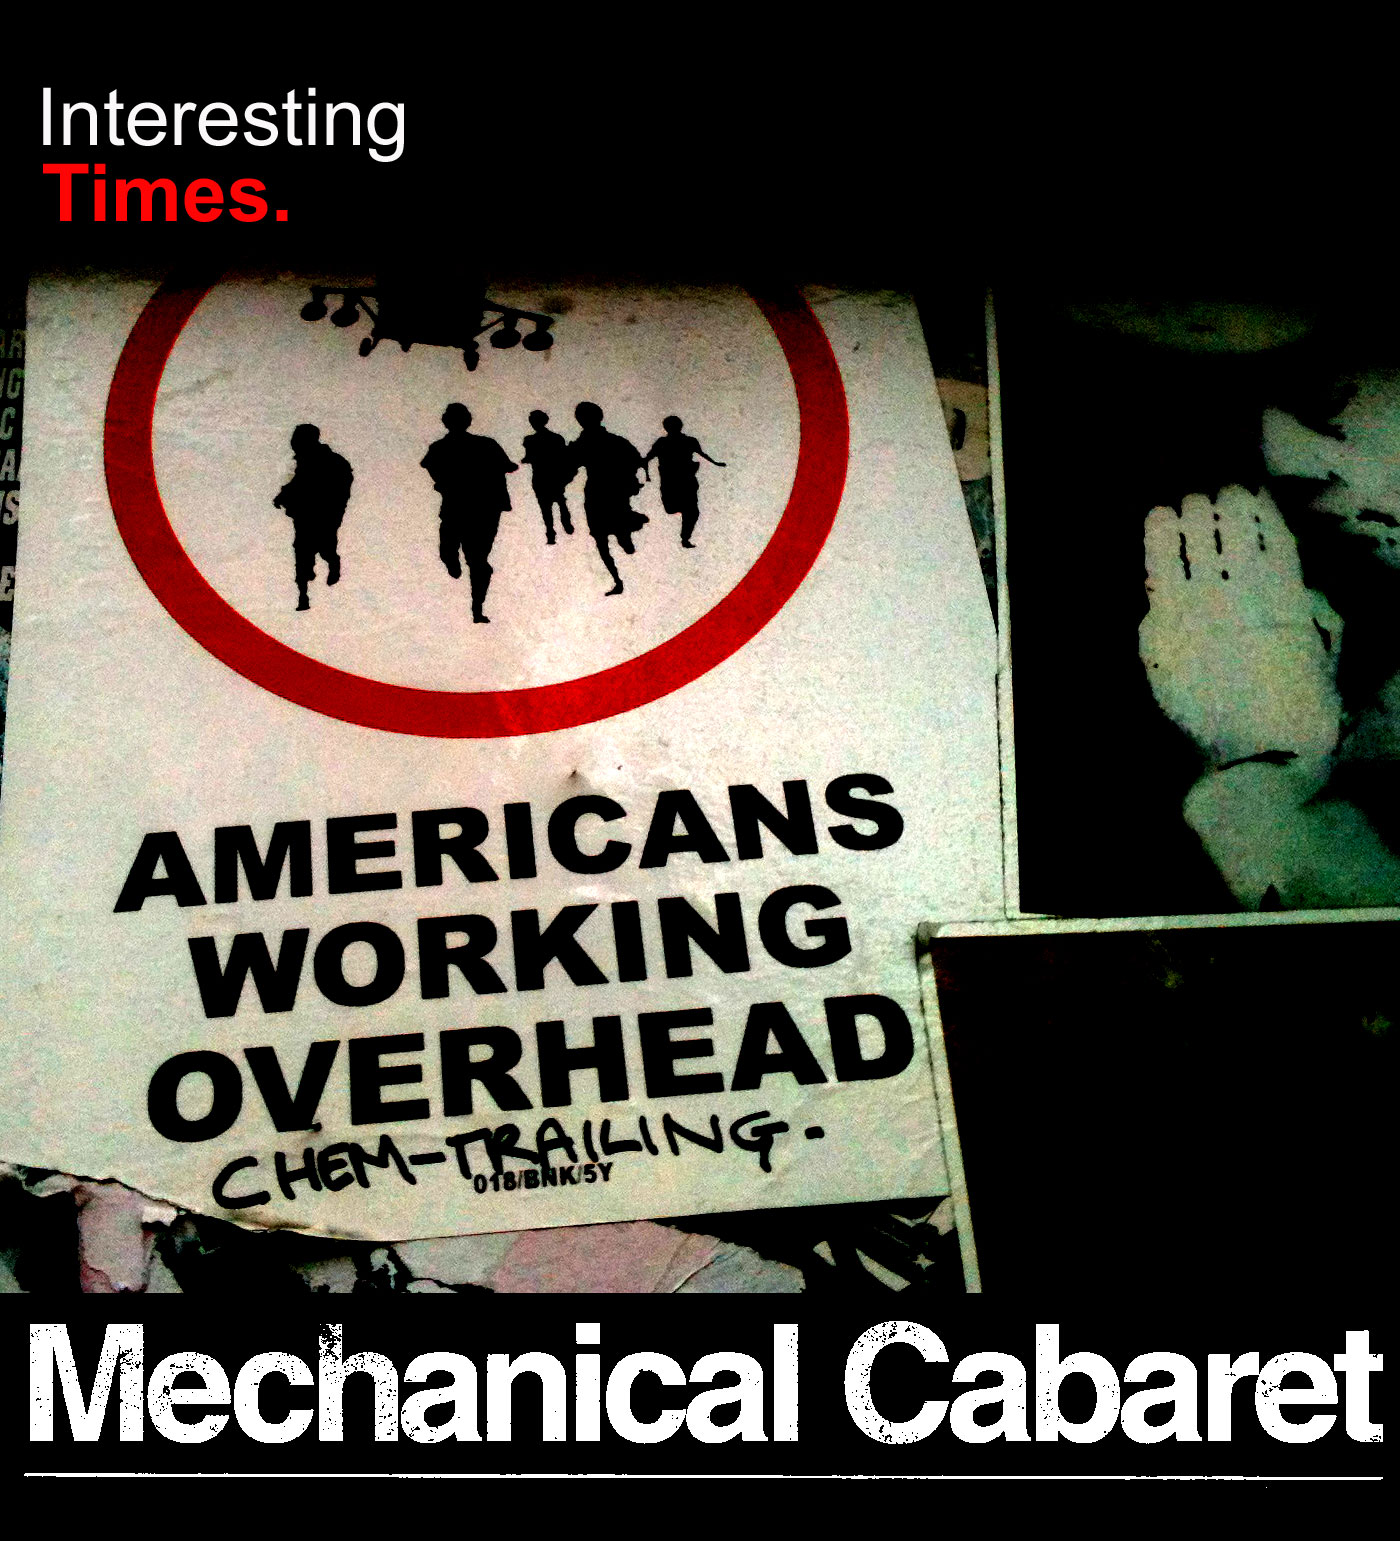 Mechanical Cabaret Interesting Times